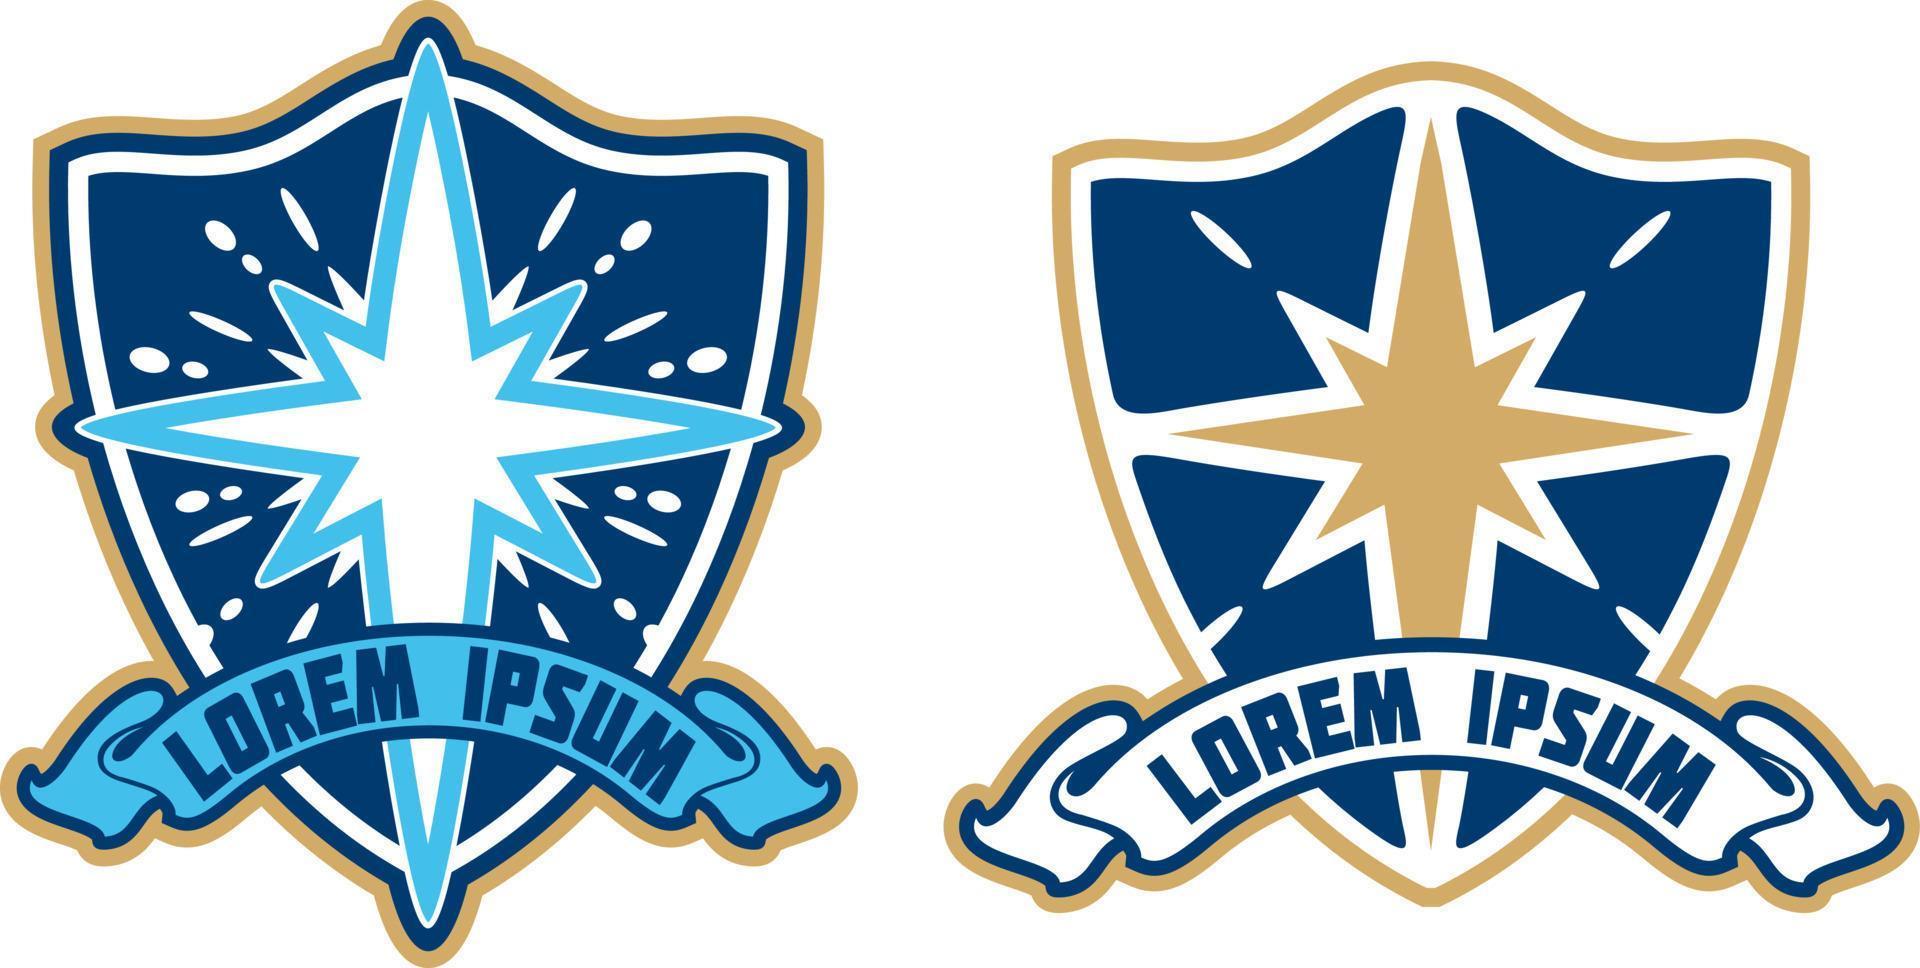 Star and shield logo vector